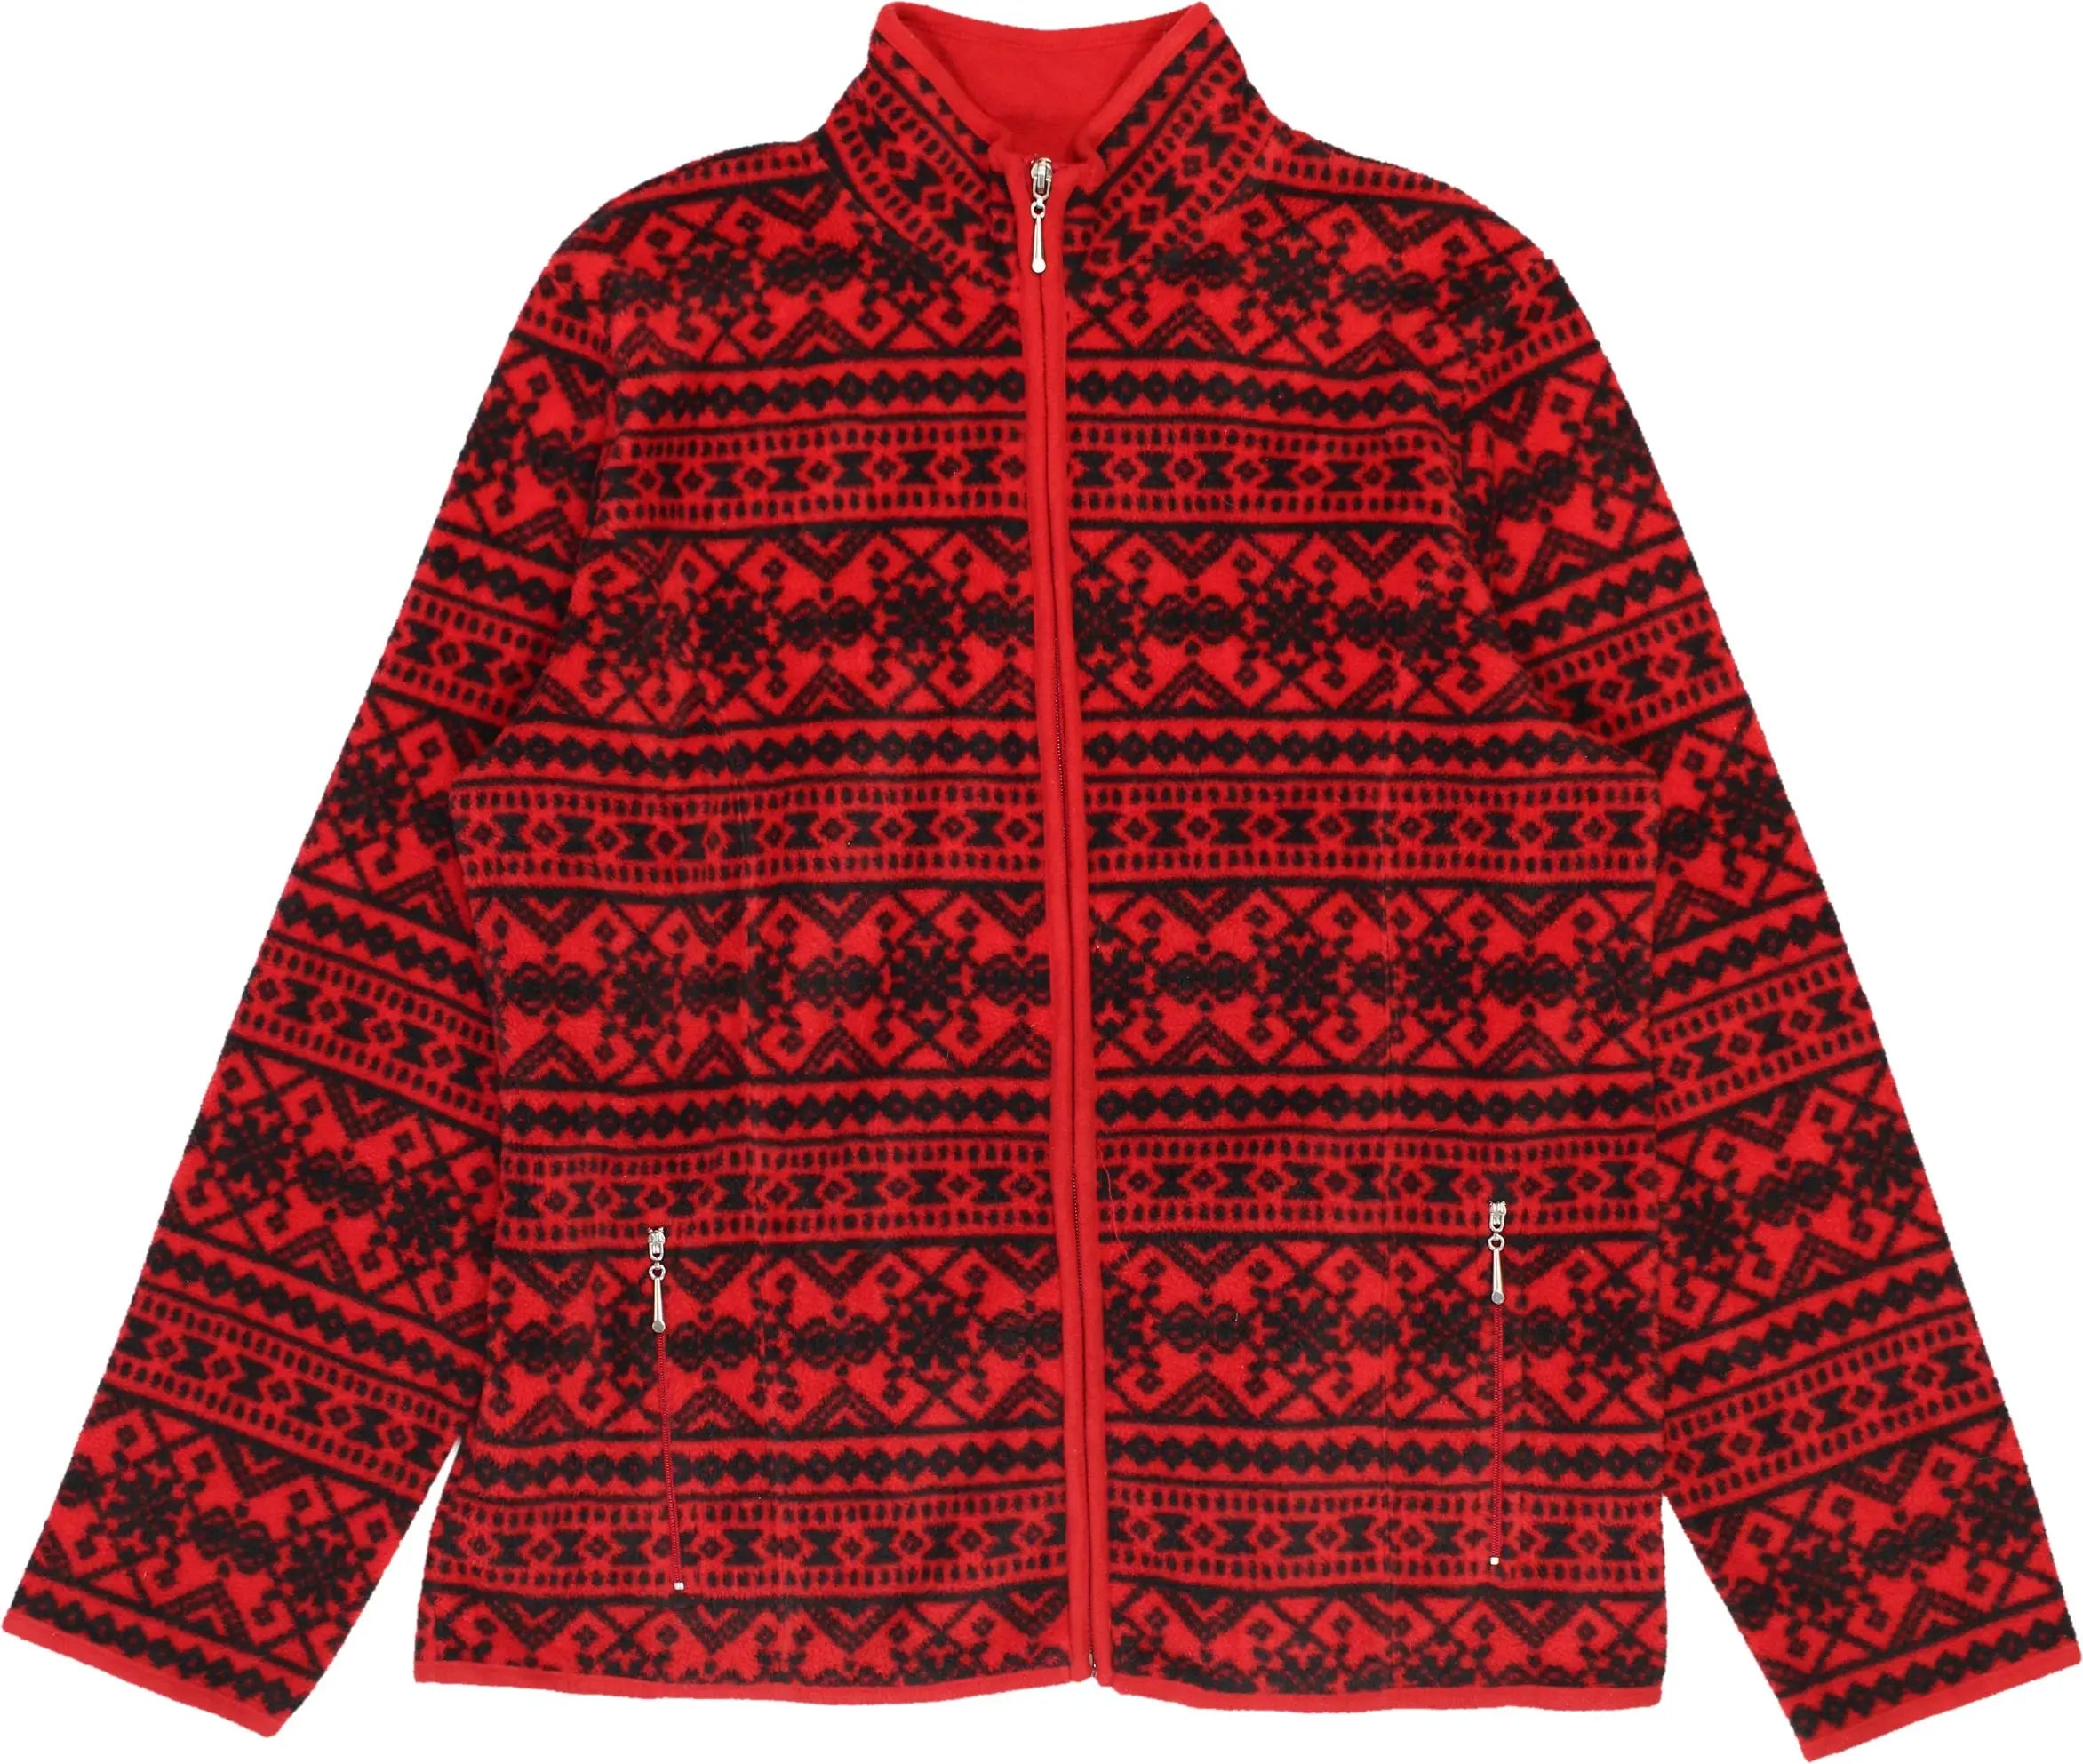 Karen Scott - Fleece Sweater- ThriftTale.com - Vintage and second handclothing